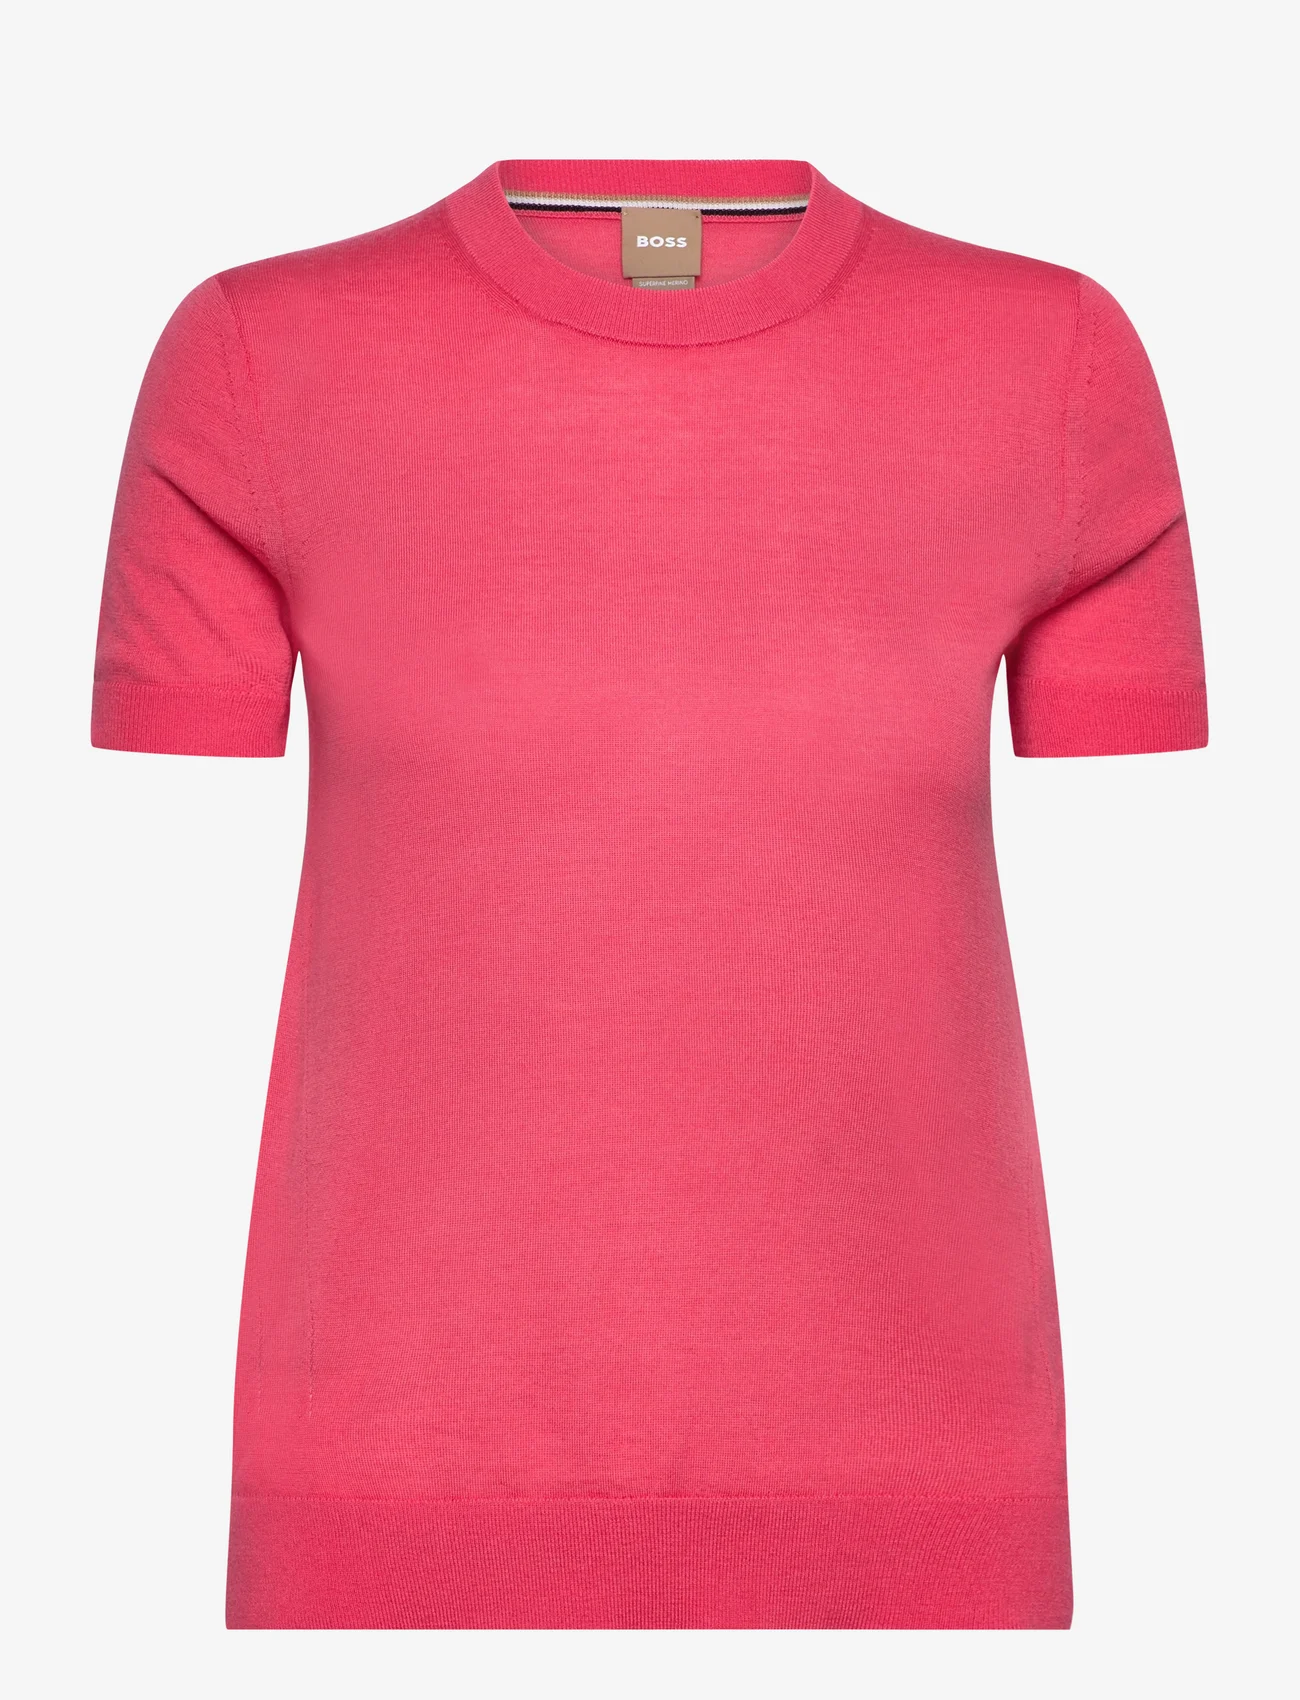 BOSS - Falyssiasi - trøjer - bright pink - 0